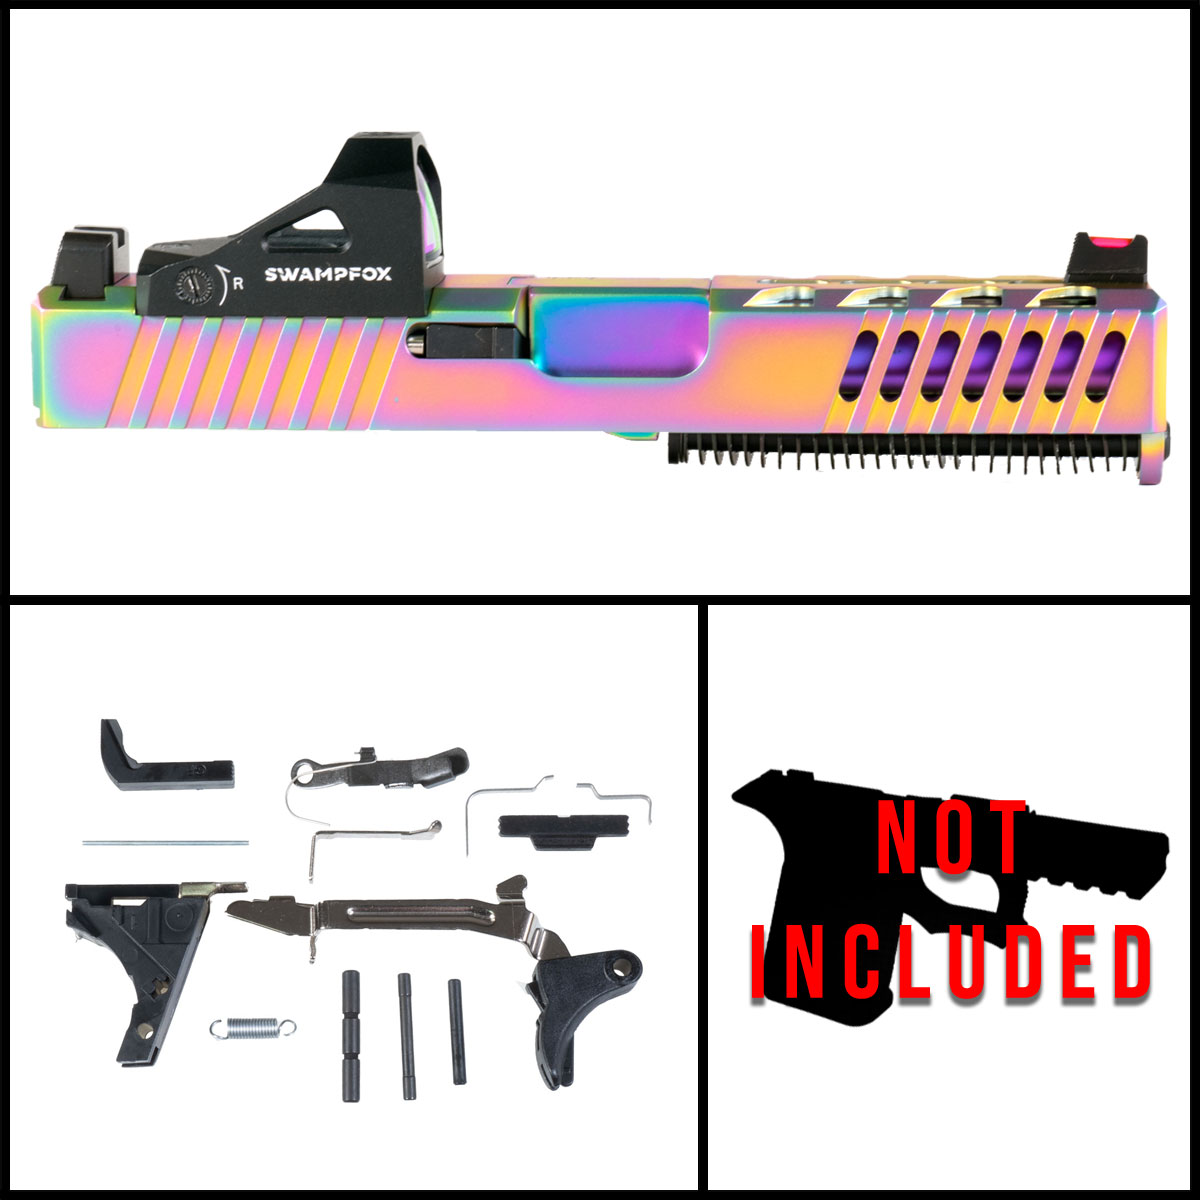 DTT 'SkyShade w/ Swampfox Justice RMR' 9mm Full Pistol Build Kits (Everything Minus Frame) - Glock 19 Gen 1-3 Compatible